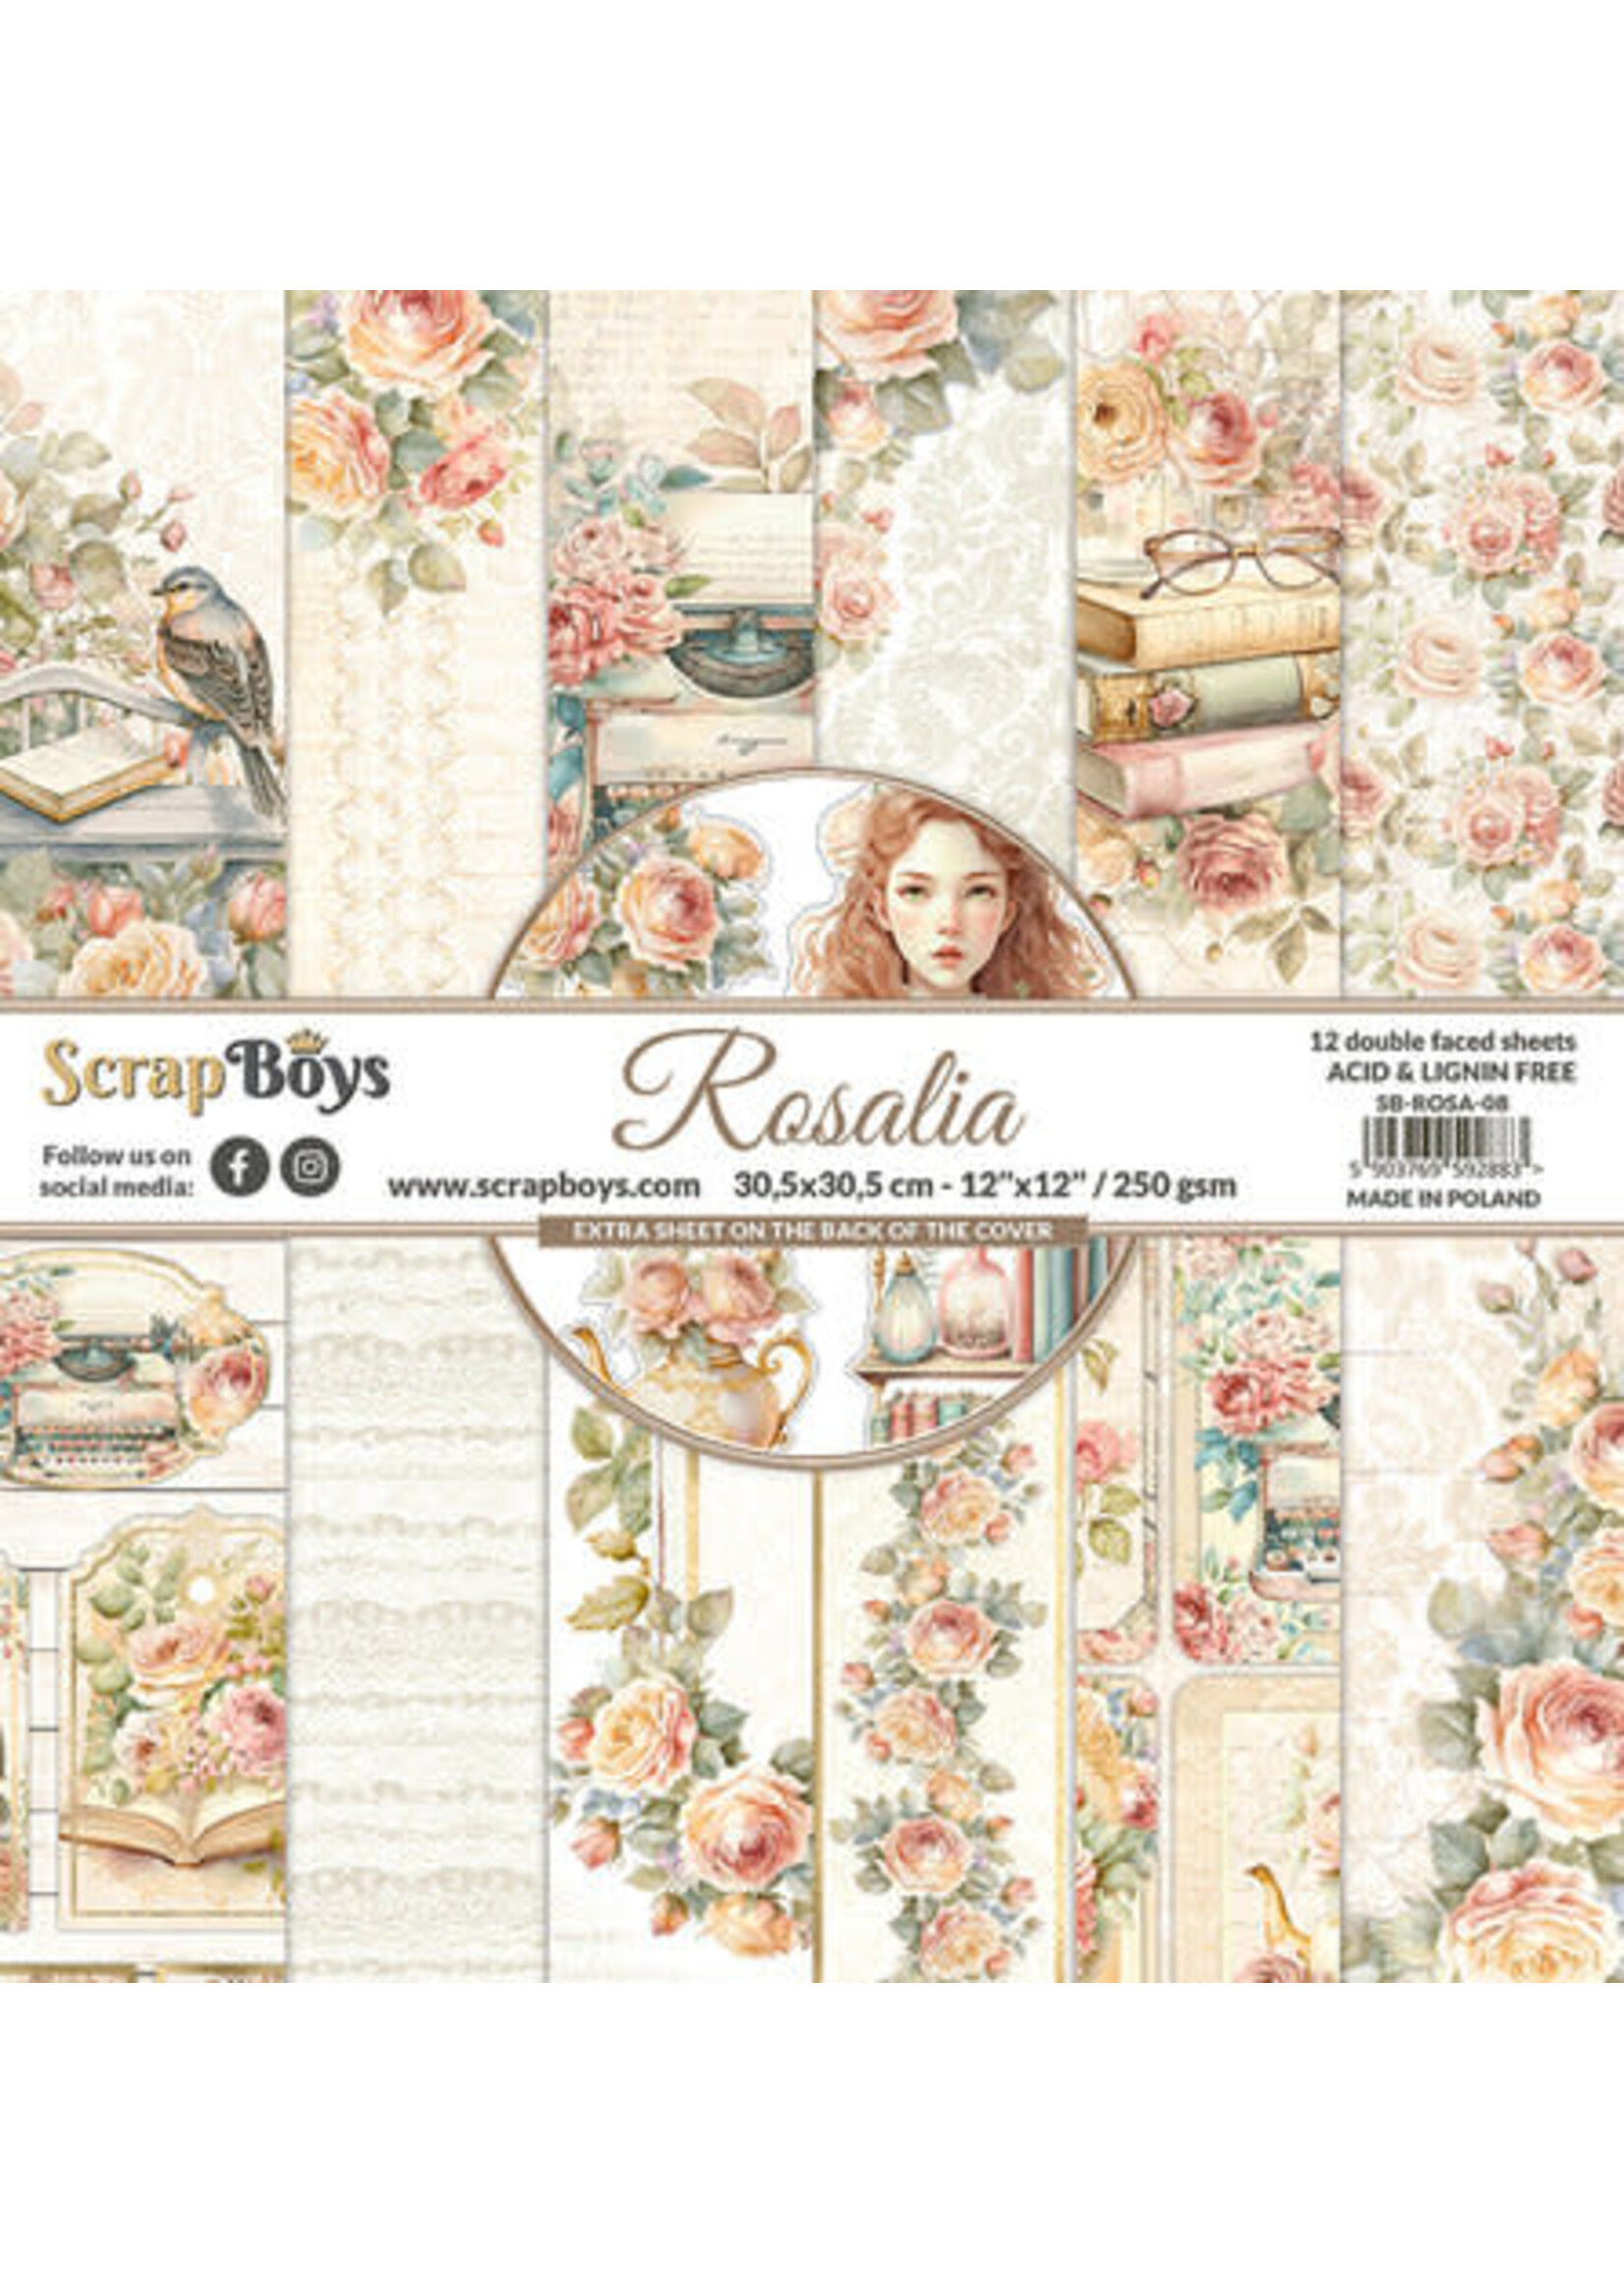 Scrapboys Rosalia 12x12 Inch Paper Pack (SB-ROSA-08)